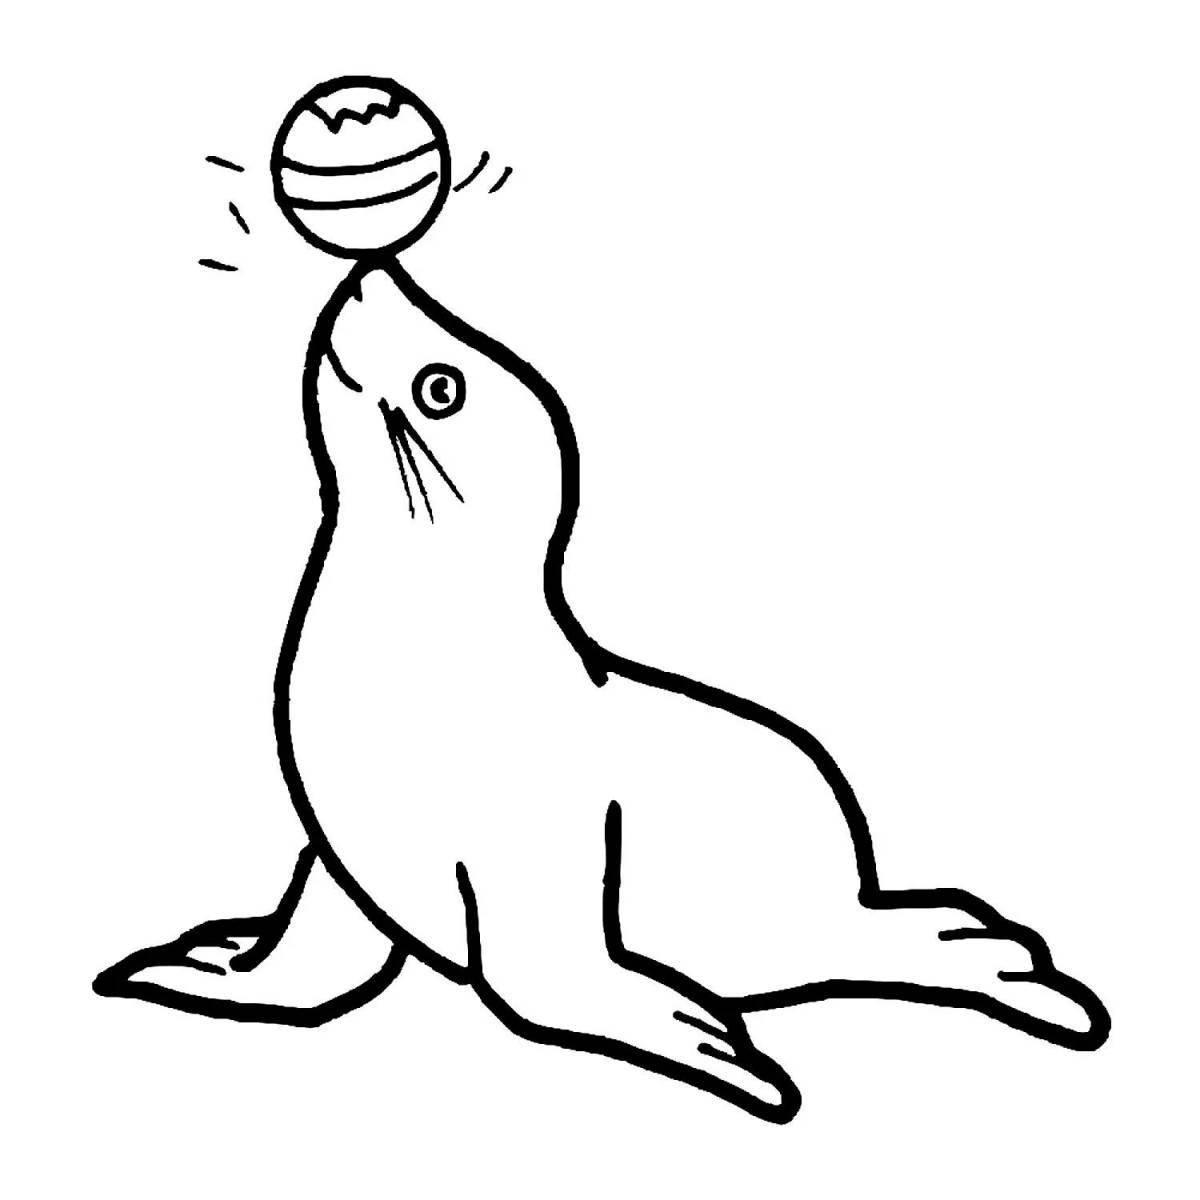 Adorable sea lion coloring page